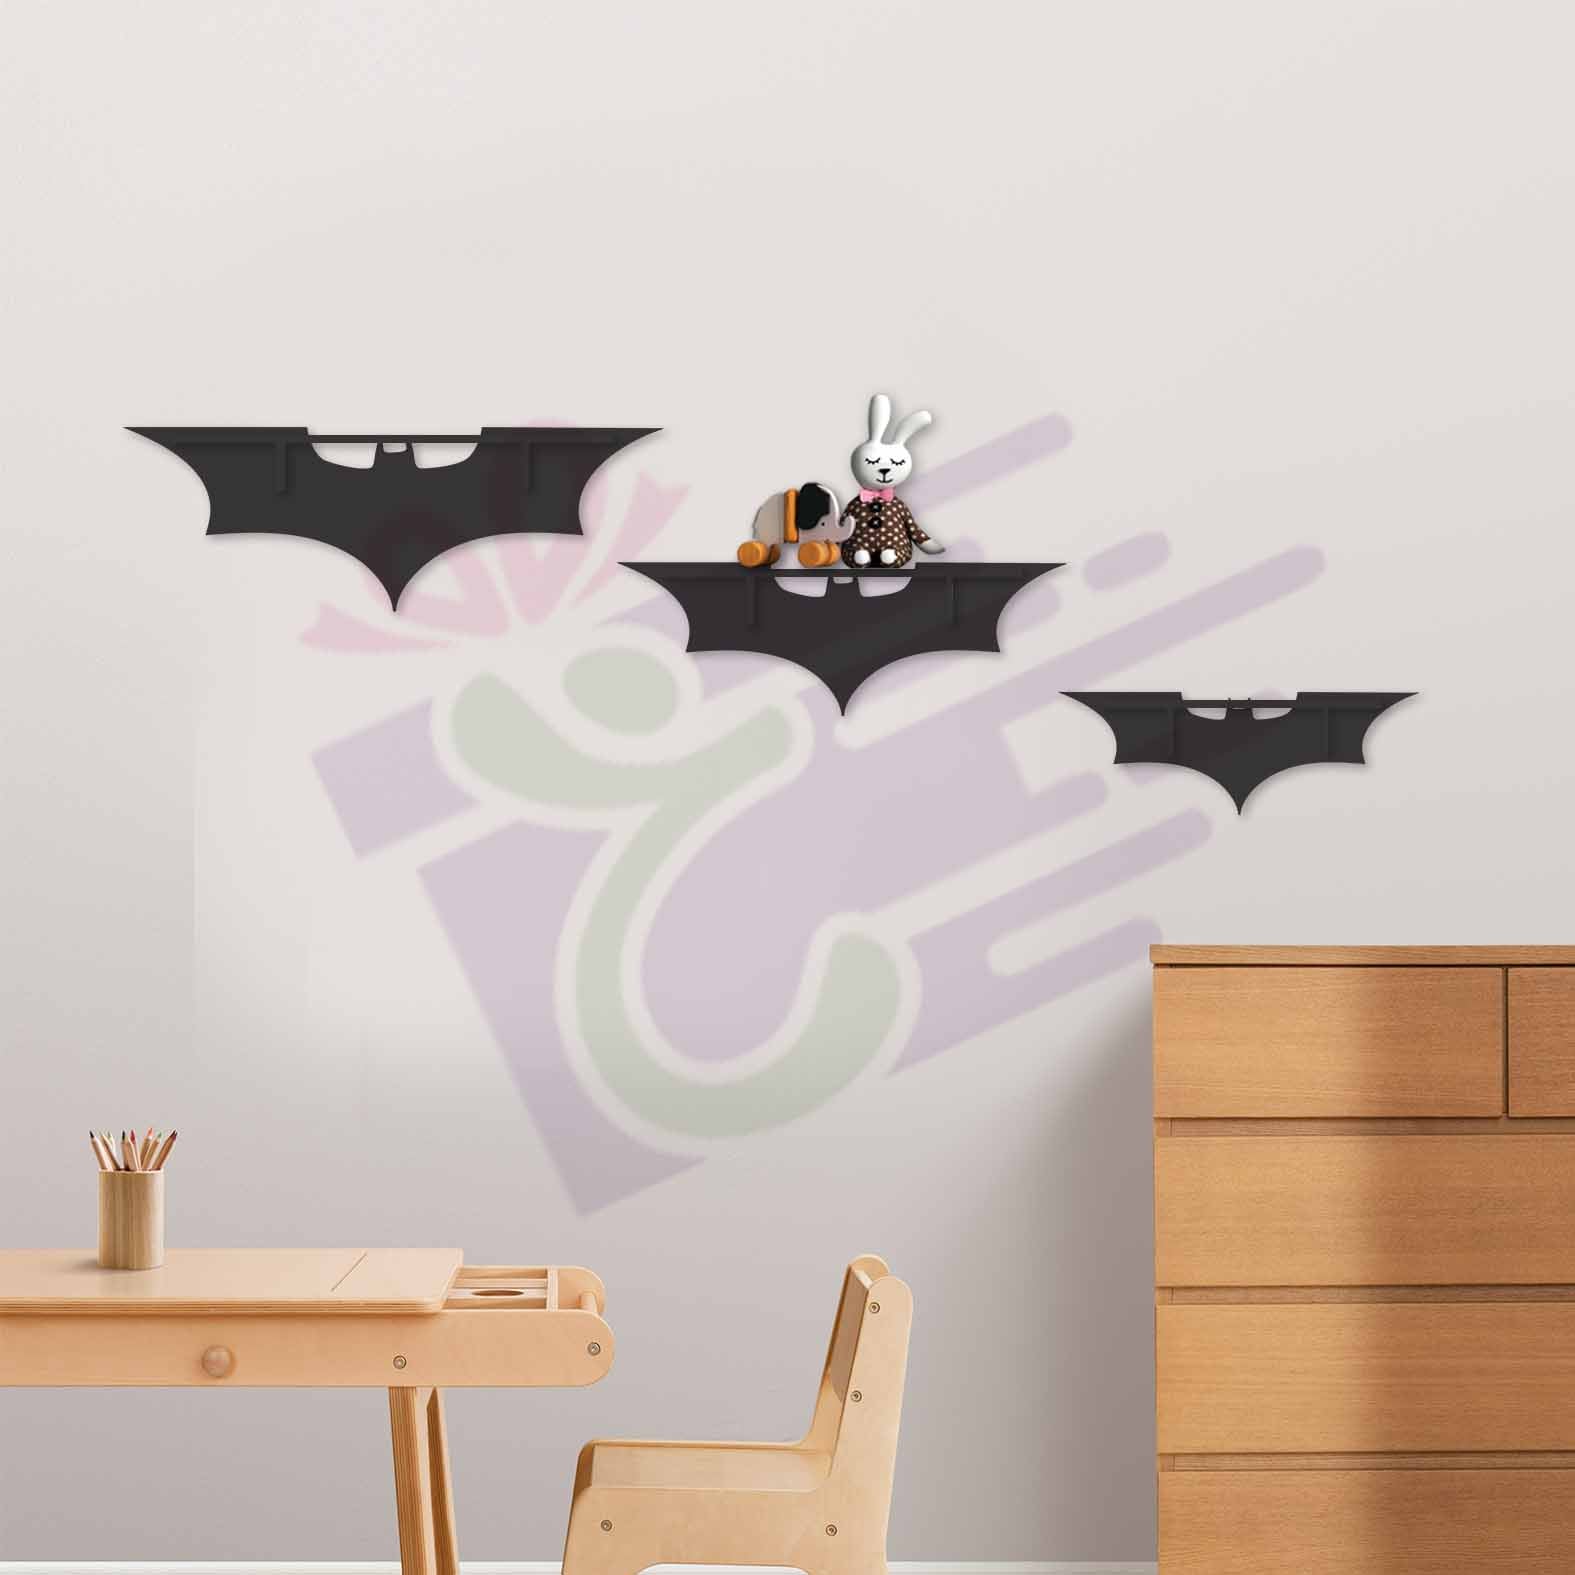 Batman shelf – 5ouza3balat